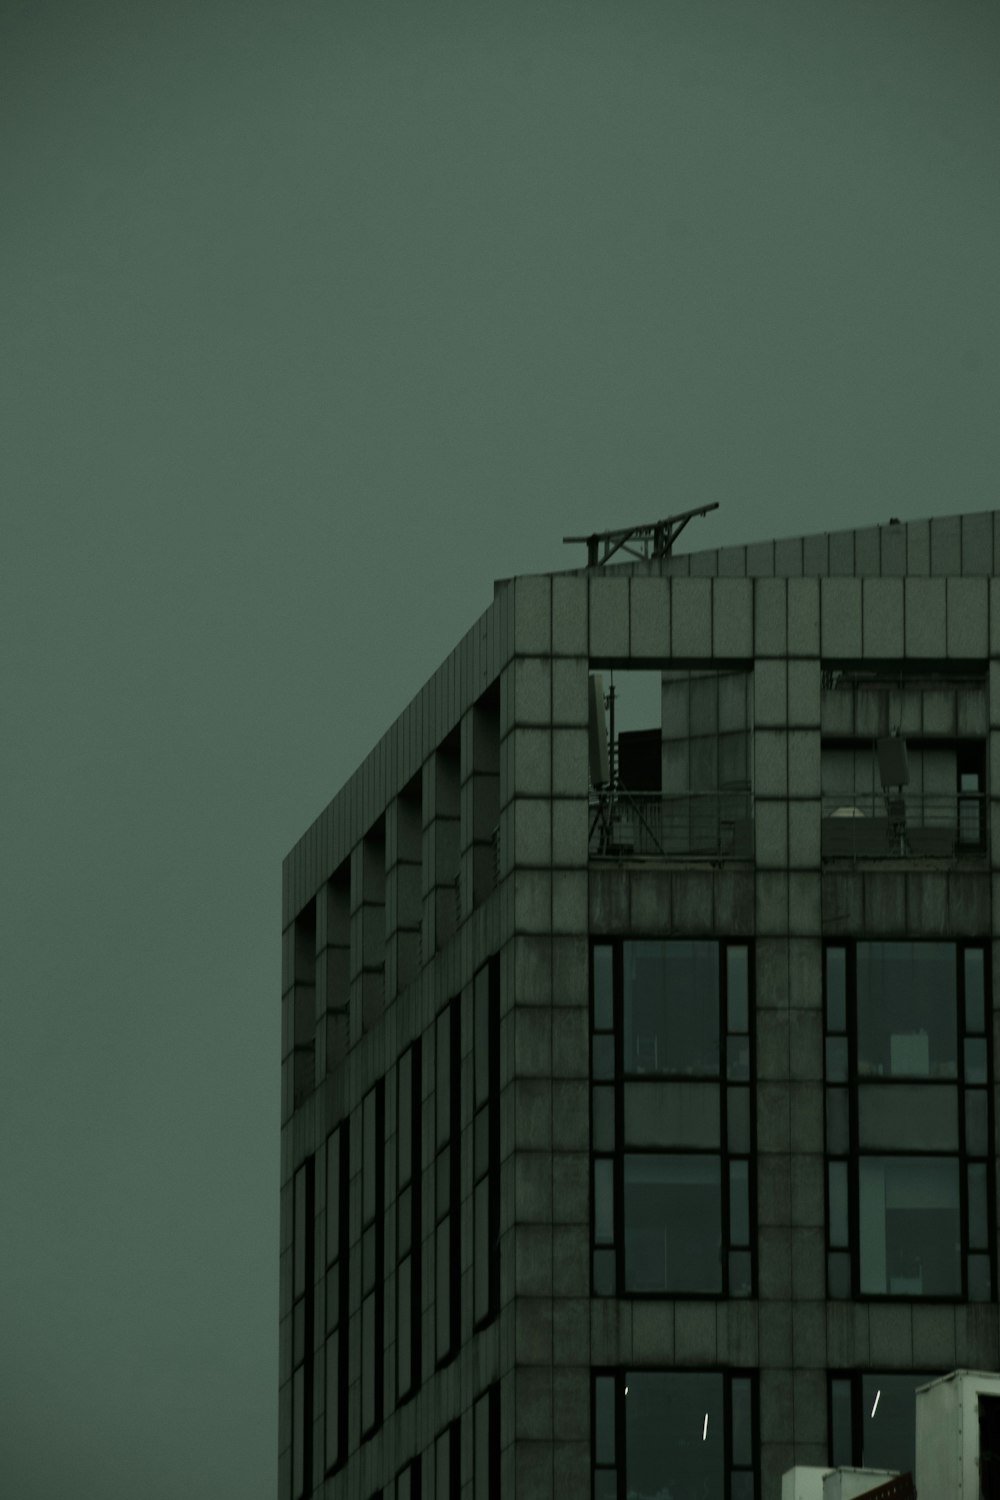 black bird flying over the building